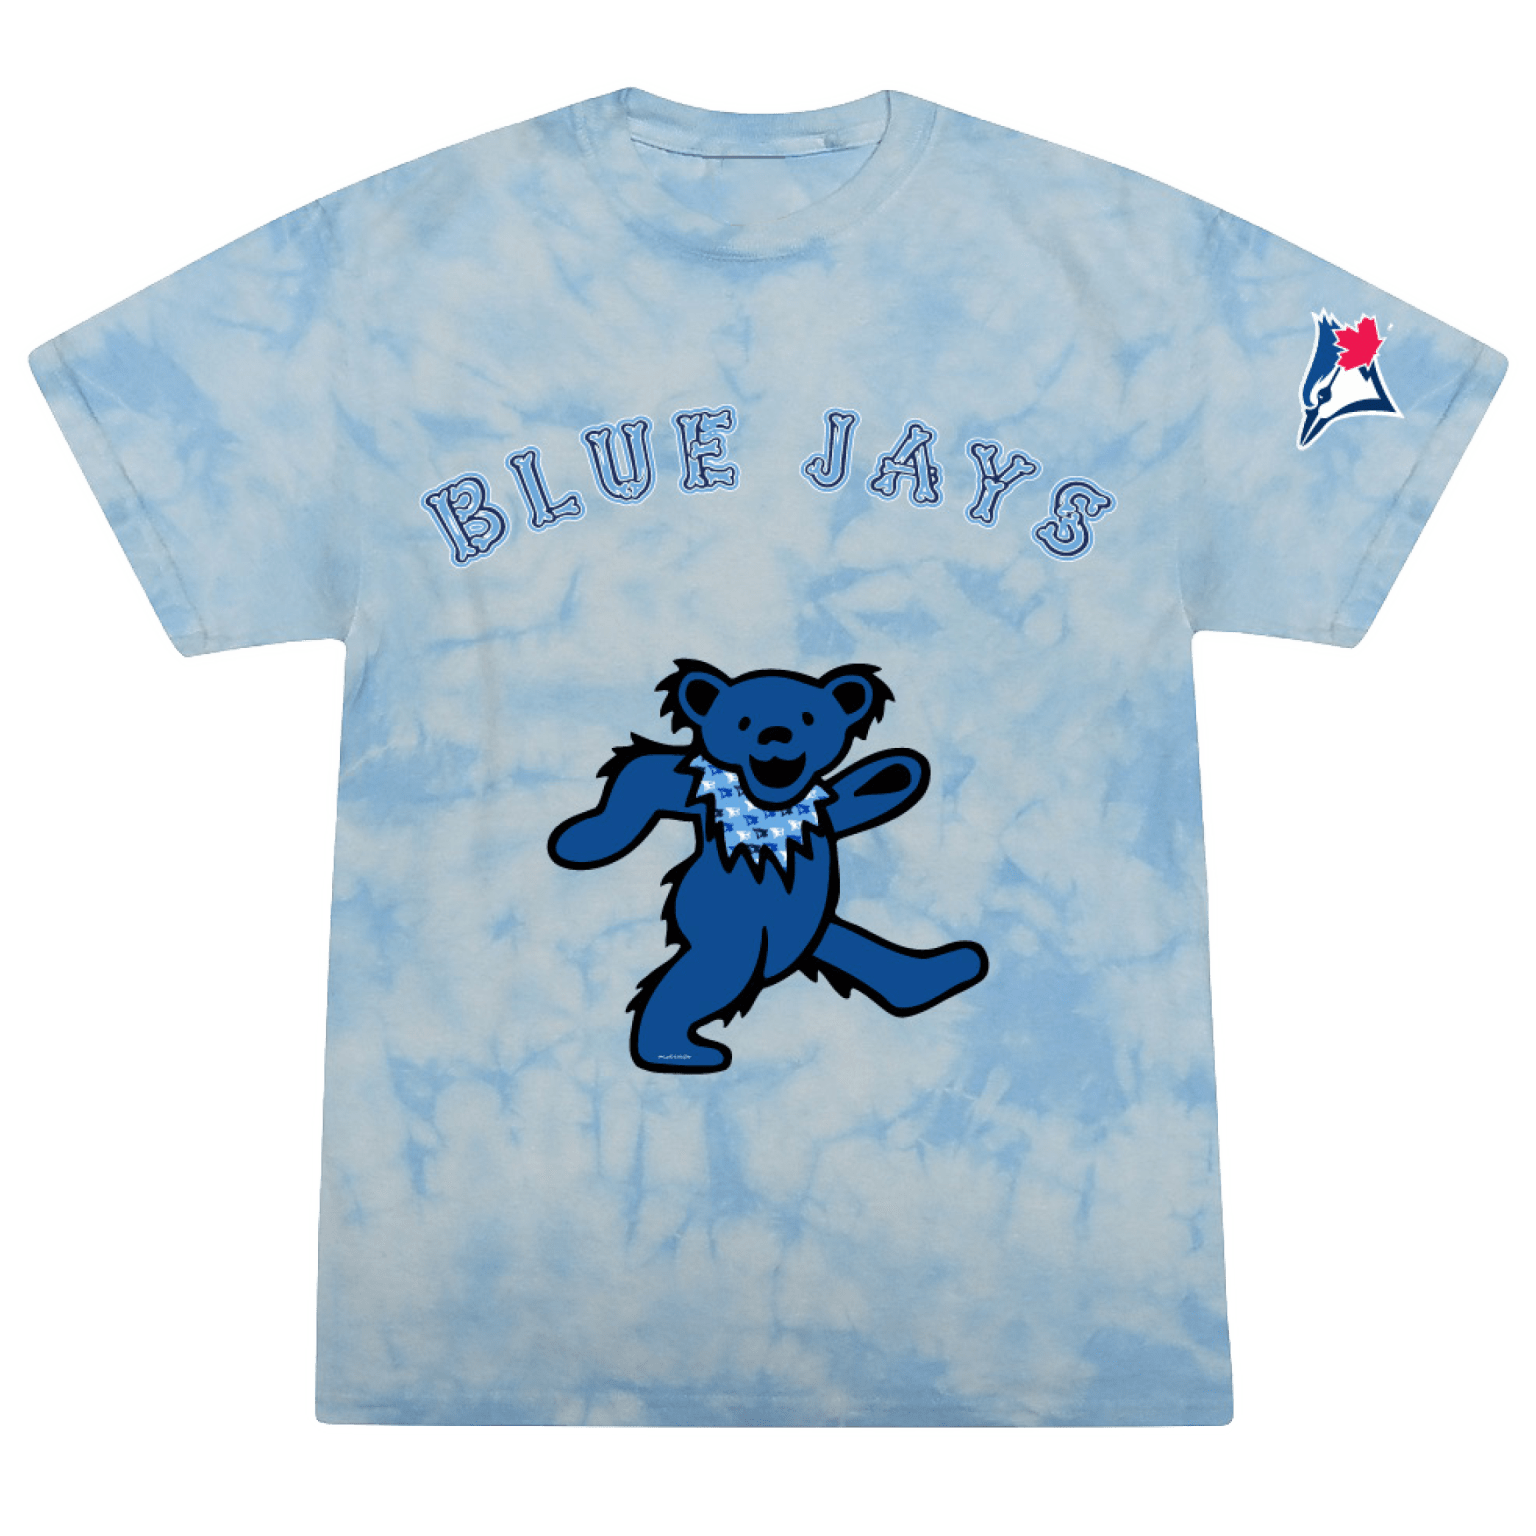 blue jays shirt price